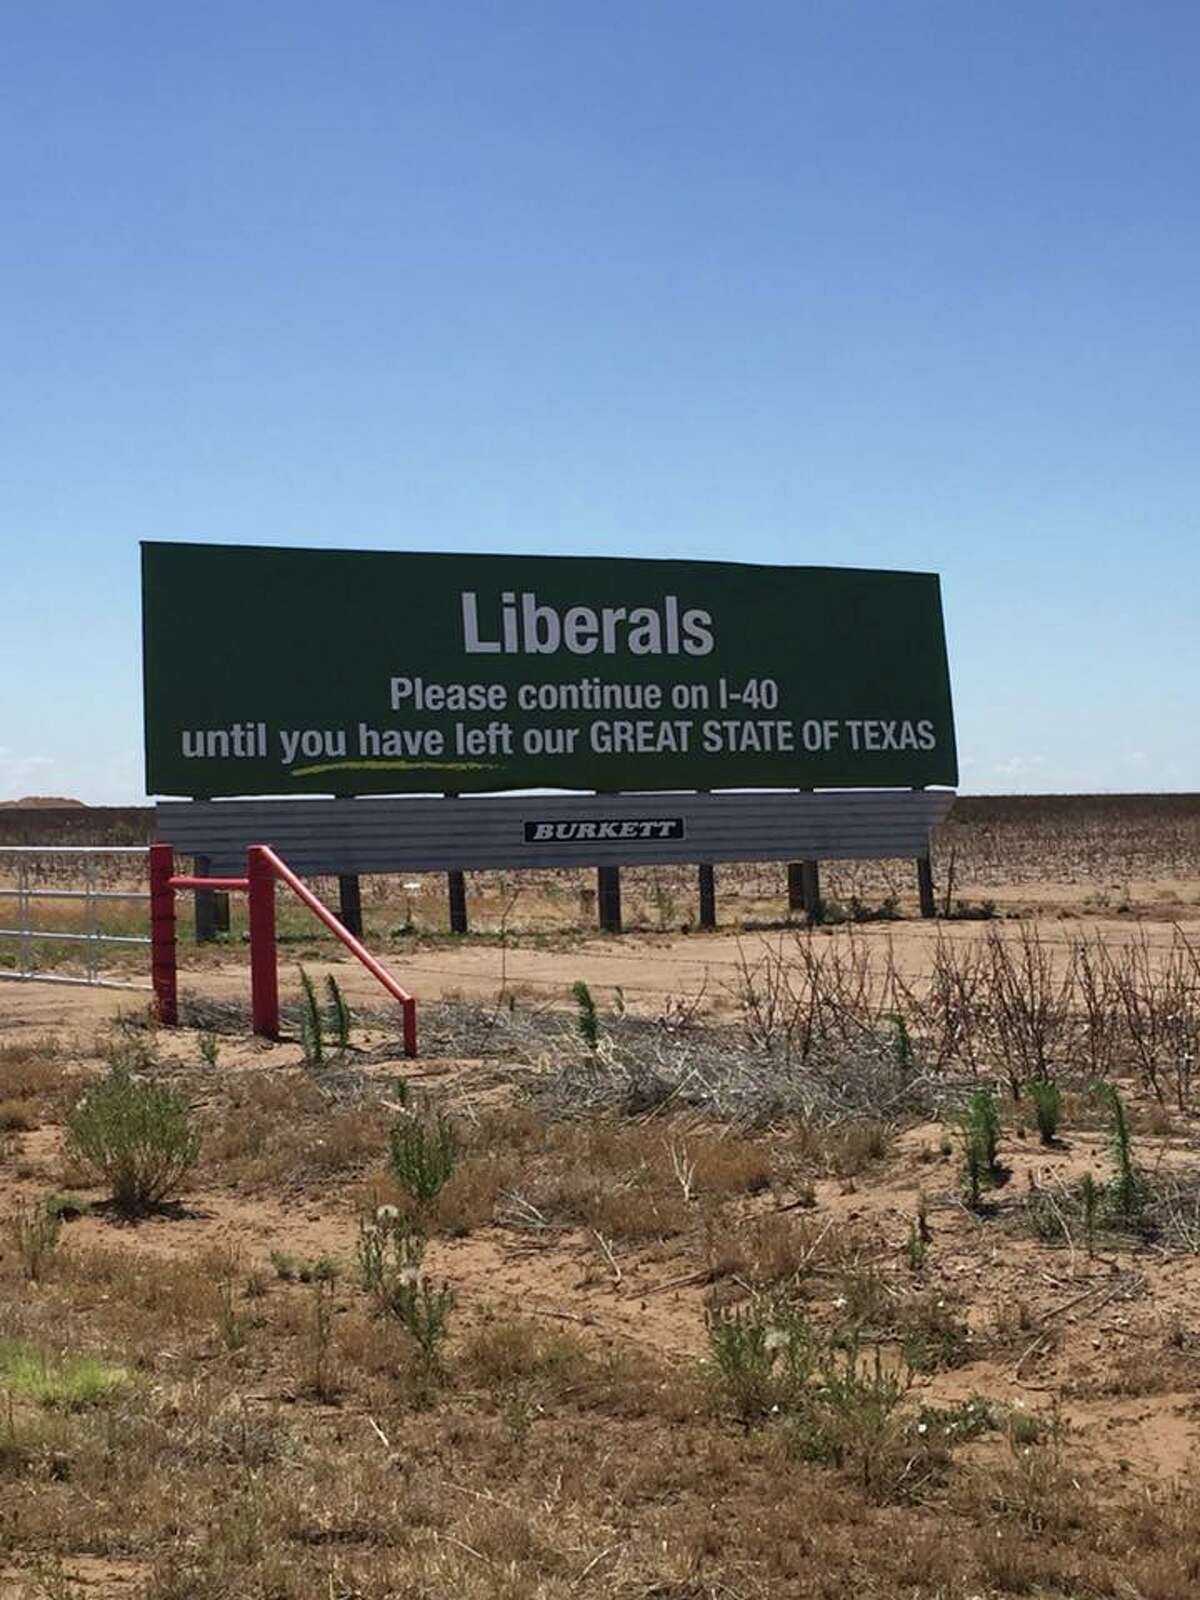 A billboard near Amarillo urges liberals to leave Texas.